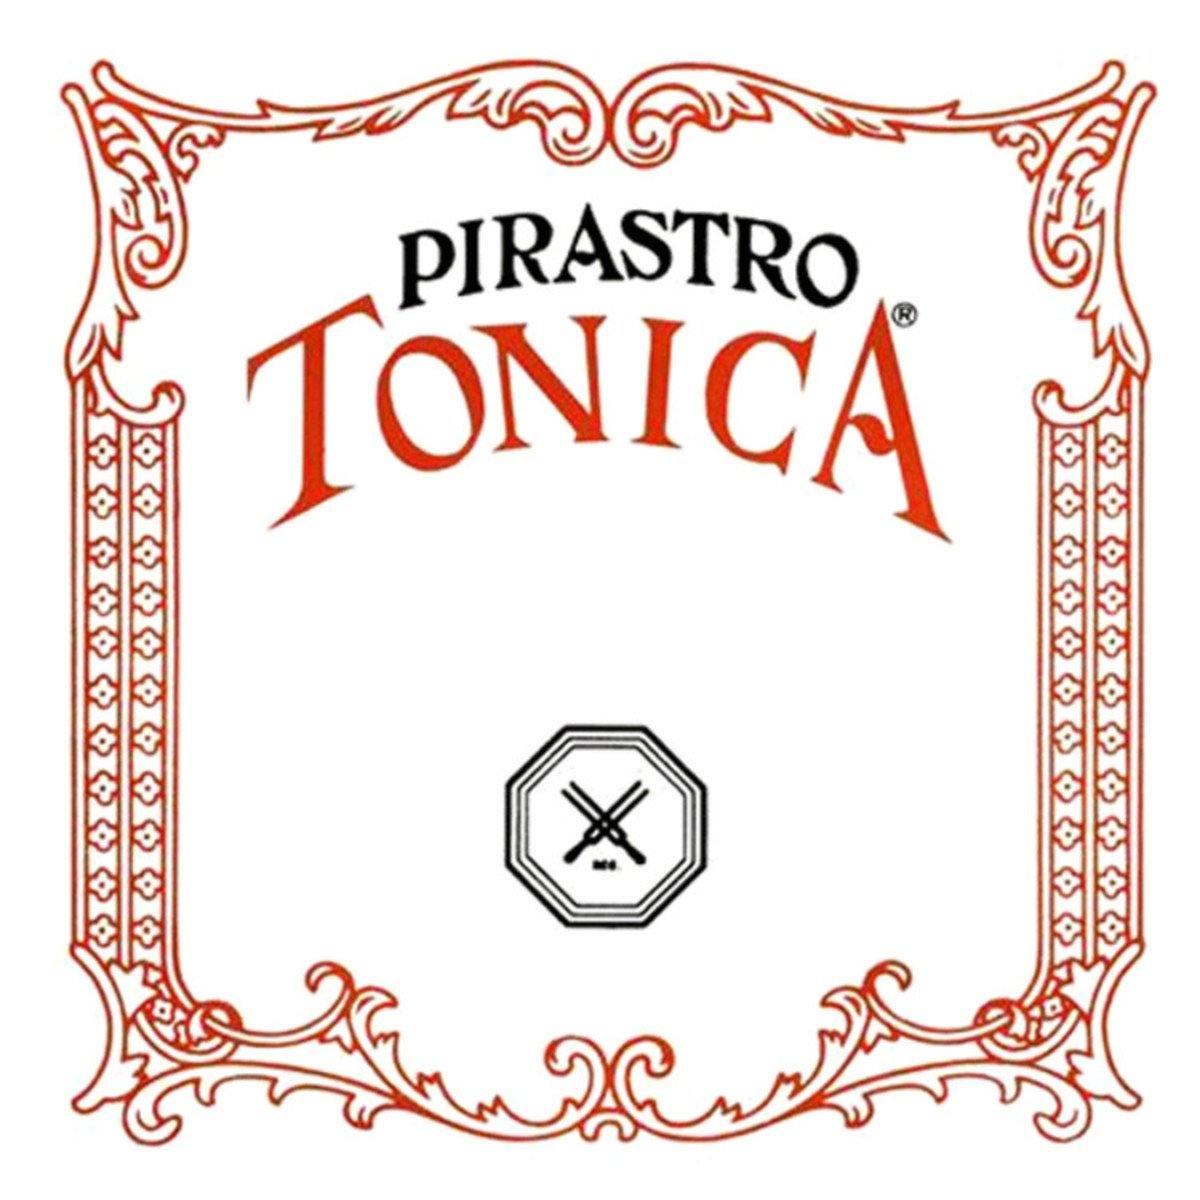 4/4 Tonica Pirastro Violin Strings - Orchestral - Strings - Accessories by Pirastro at Muso's Stuff